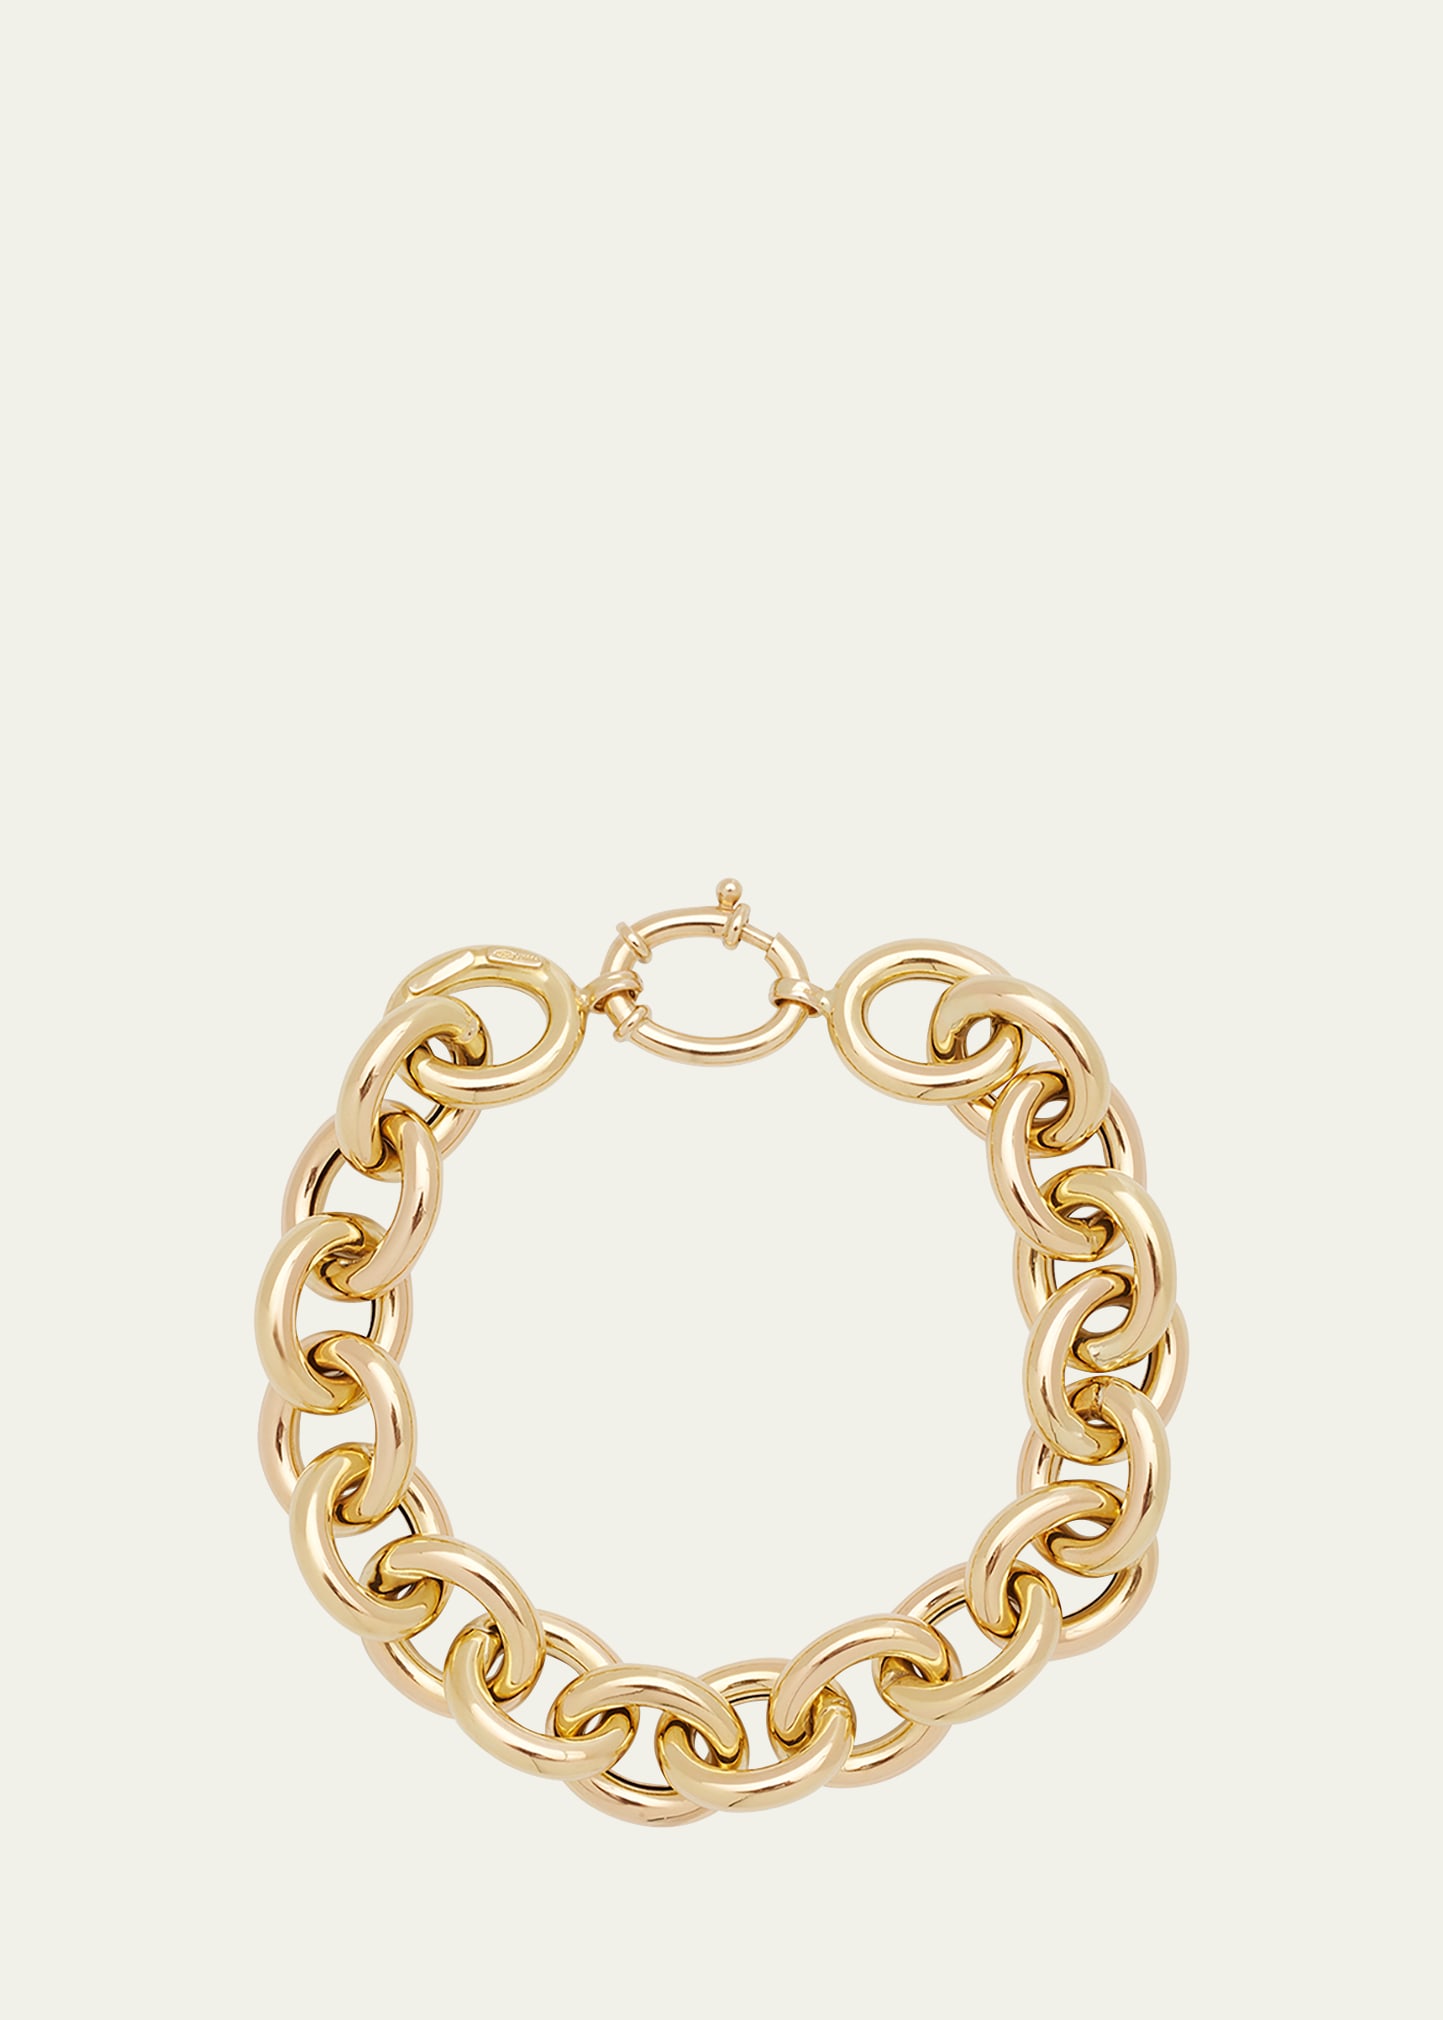 Faraone Mennella 18K Yellow Gold Chain Link Bracelet